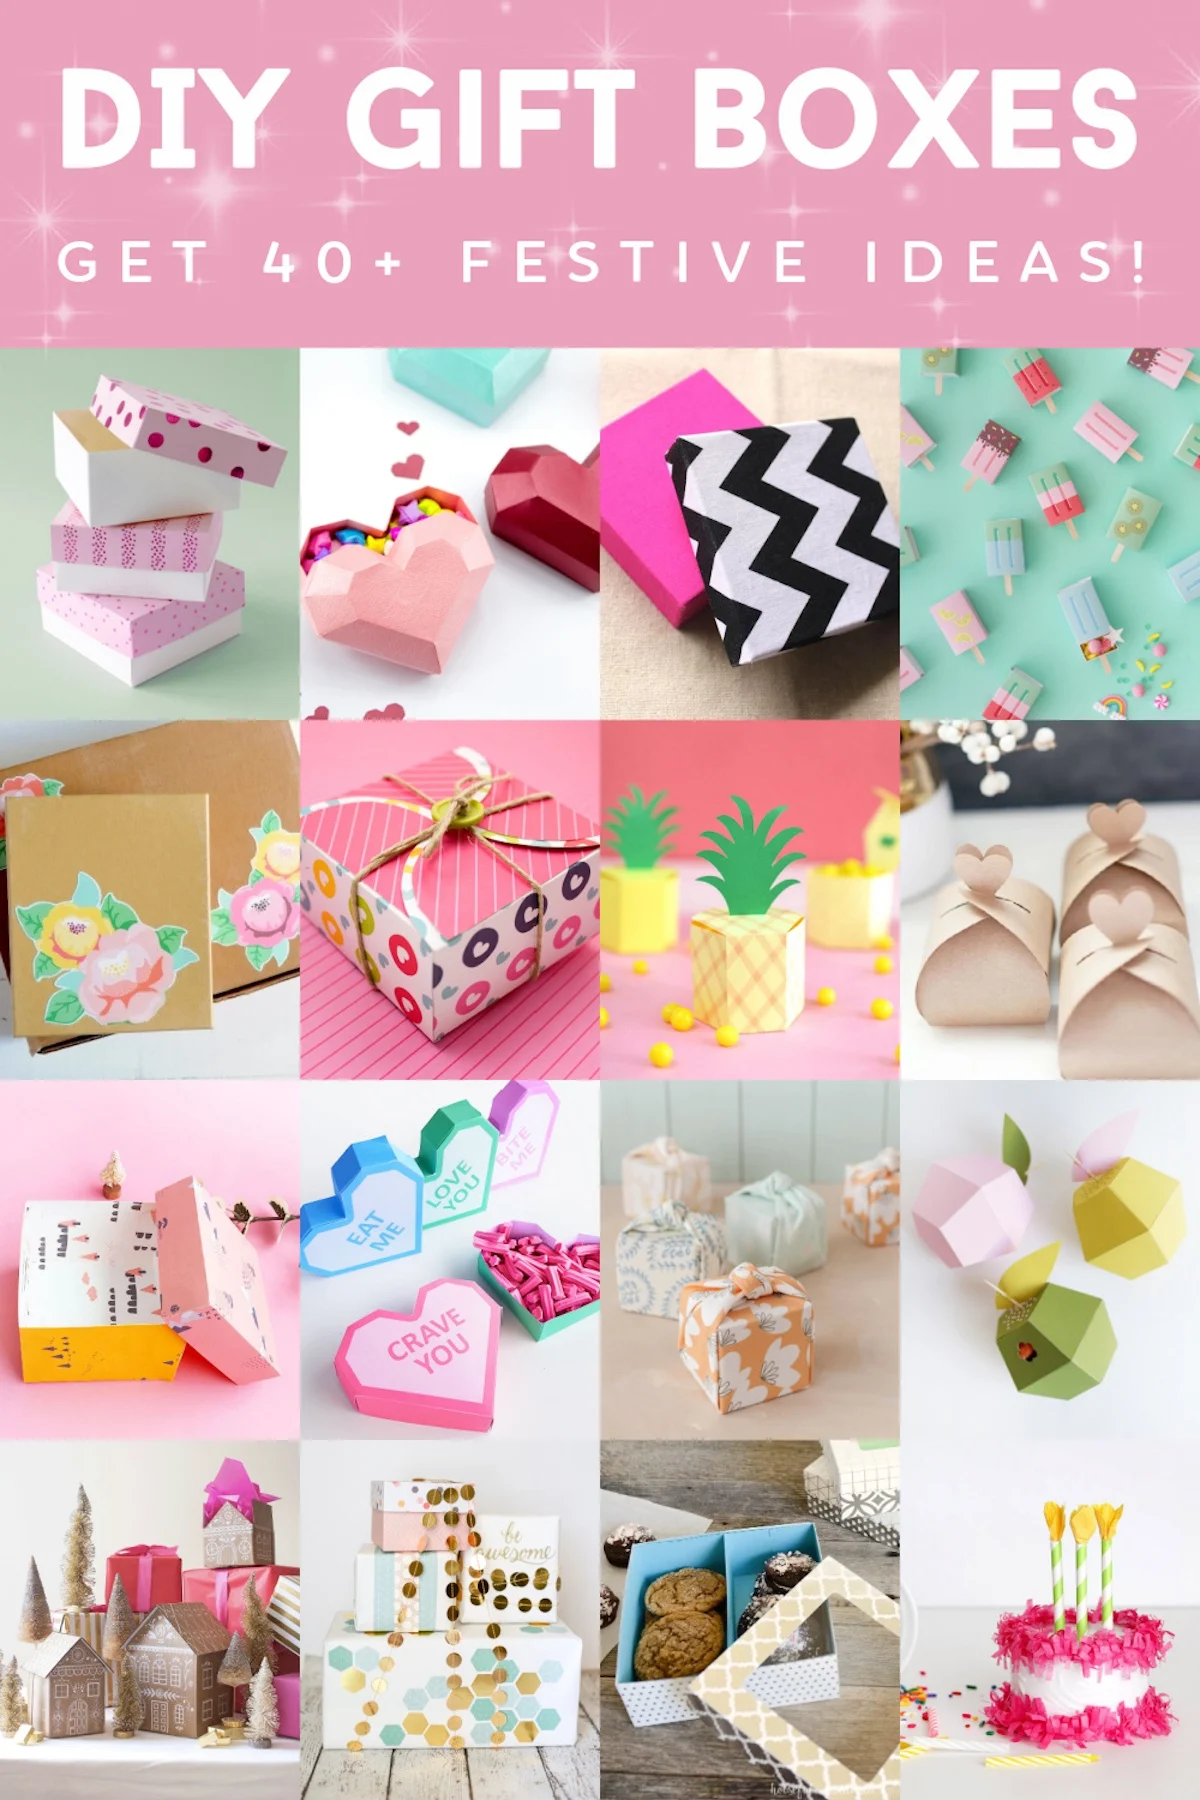 Custom Pink Couple Girly Love Photo Gift box Cardboard Packaging